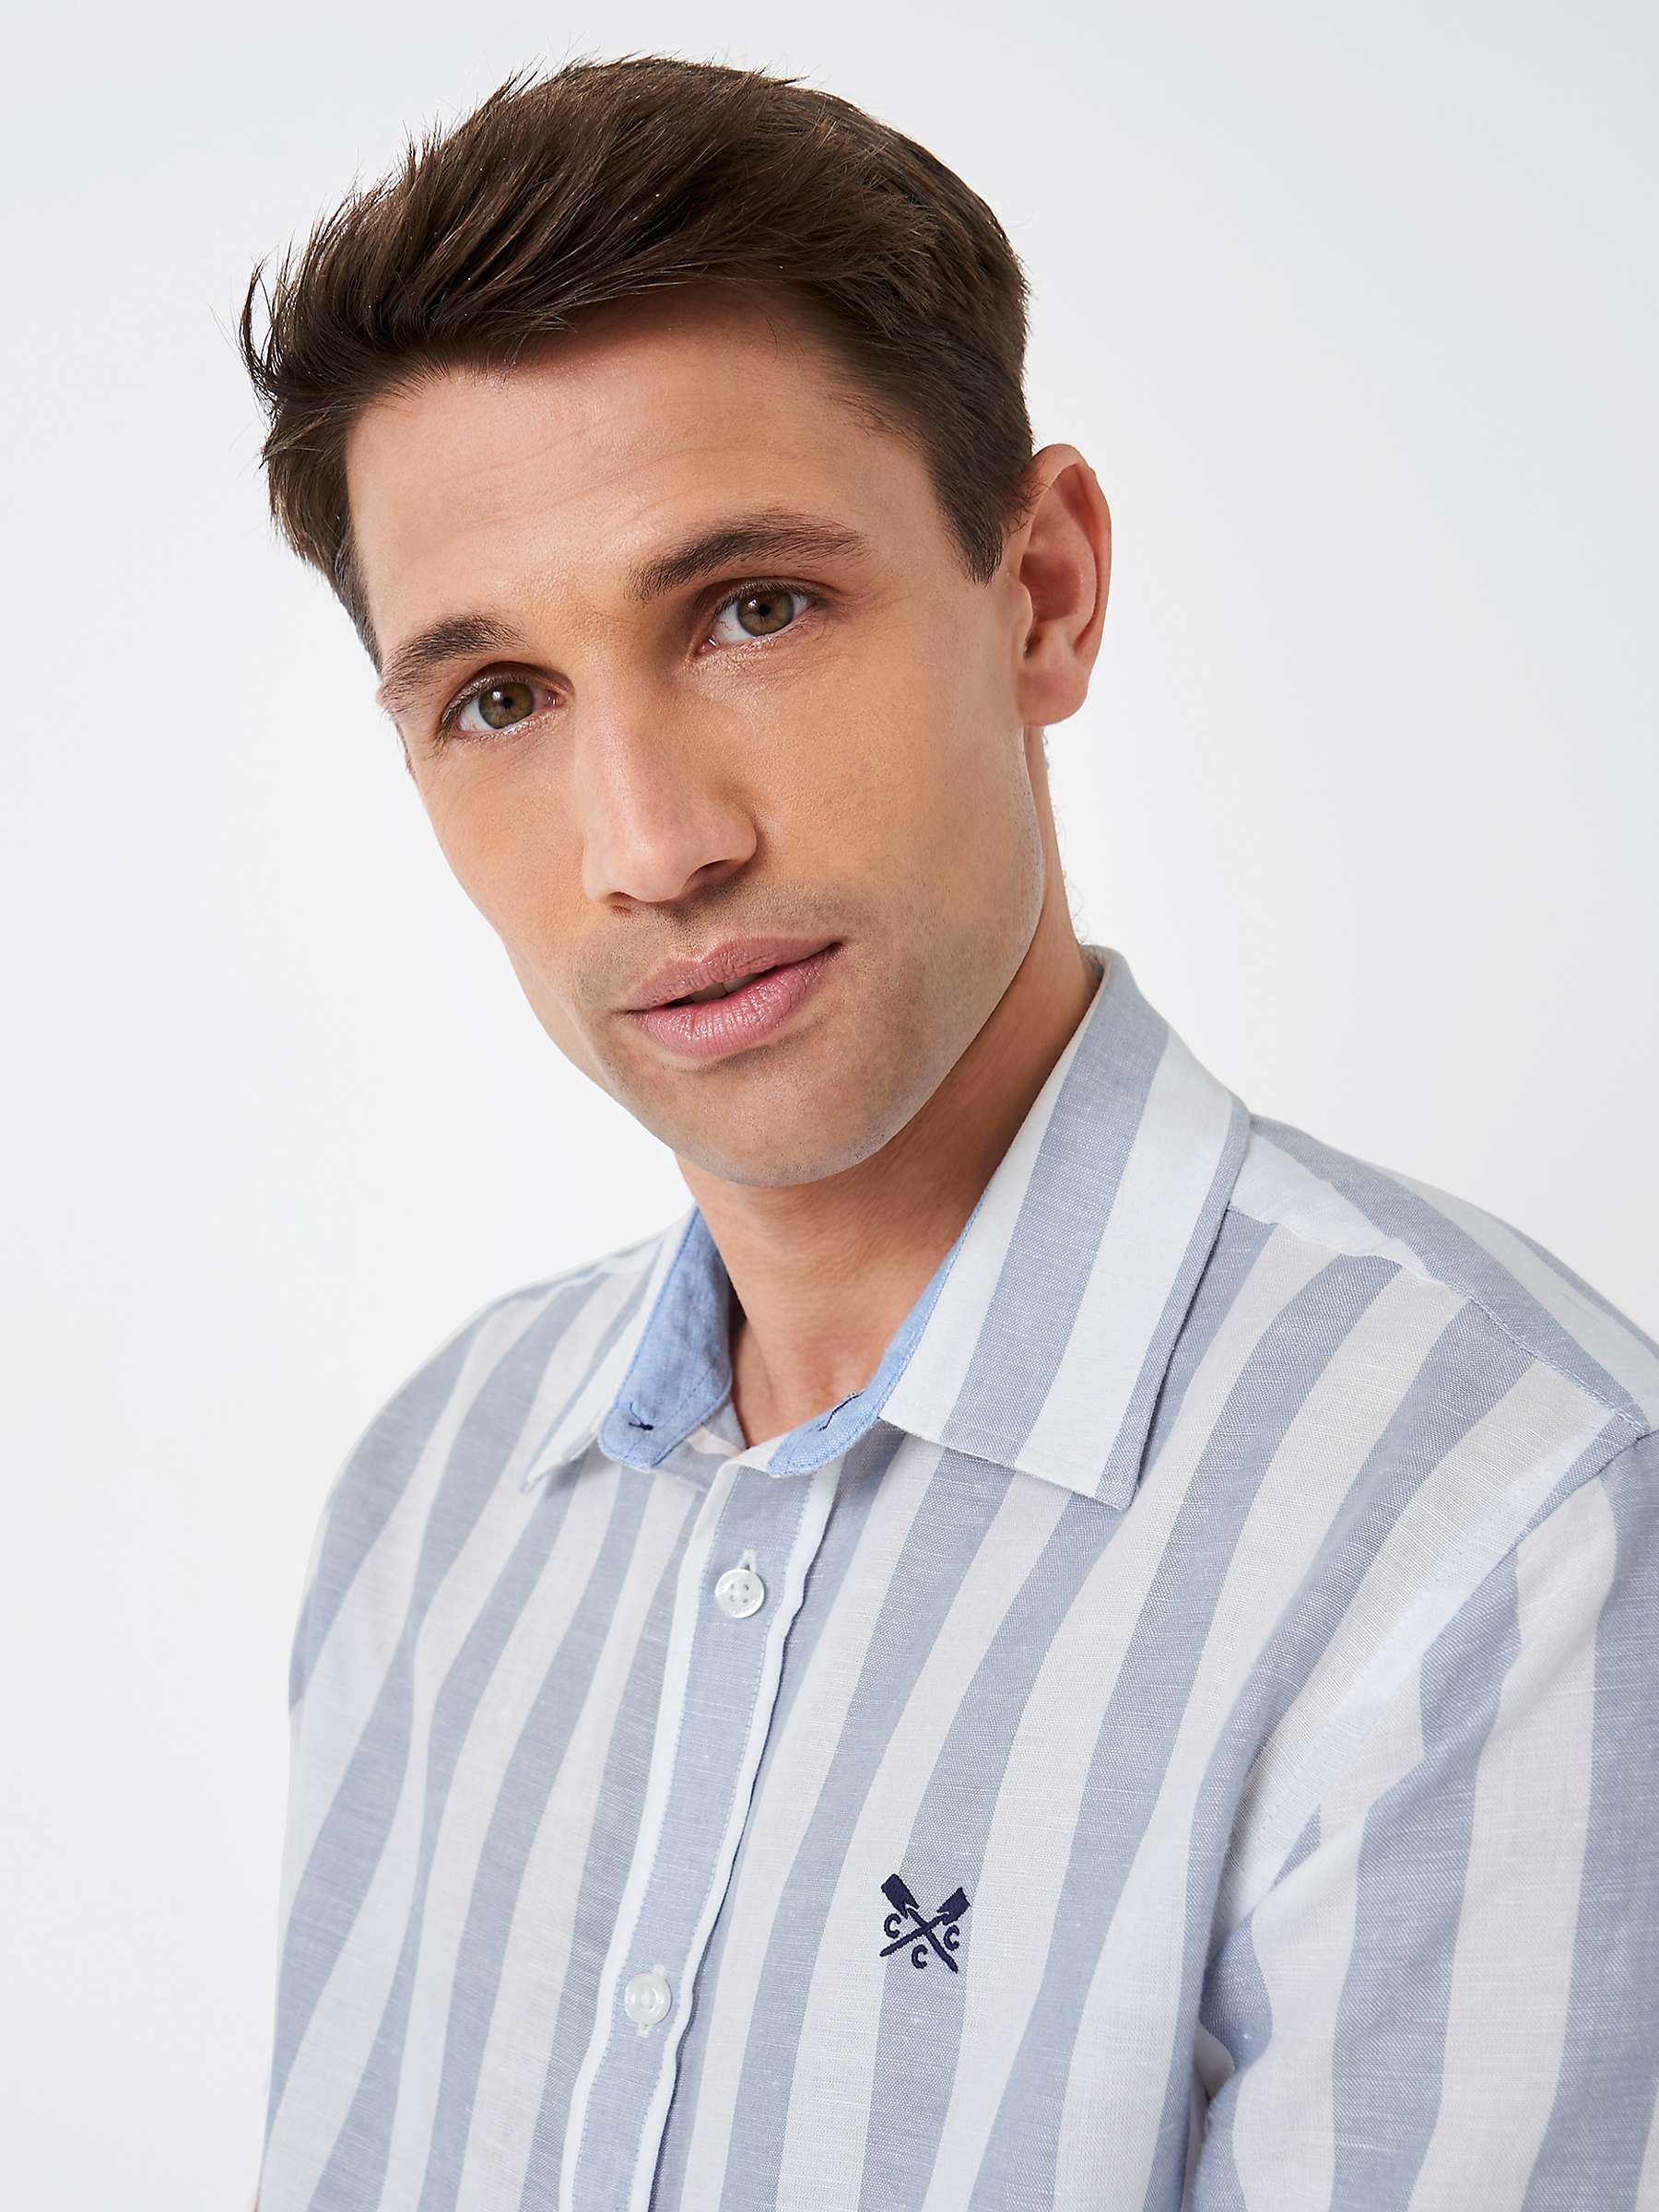 Buy Crew Clothing Class Striped Linen Blend Shirt, White/Blue Online at johnlewis.com